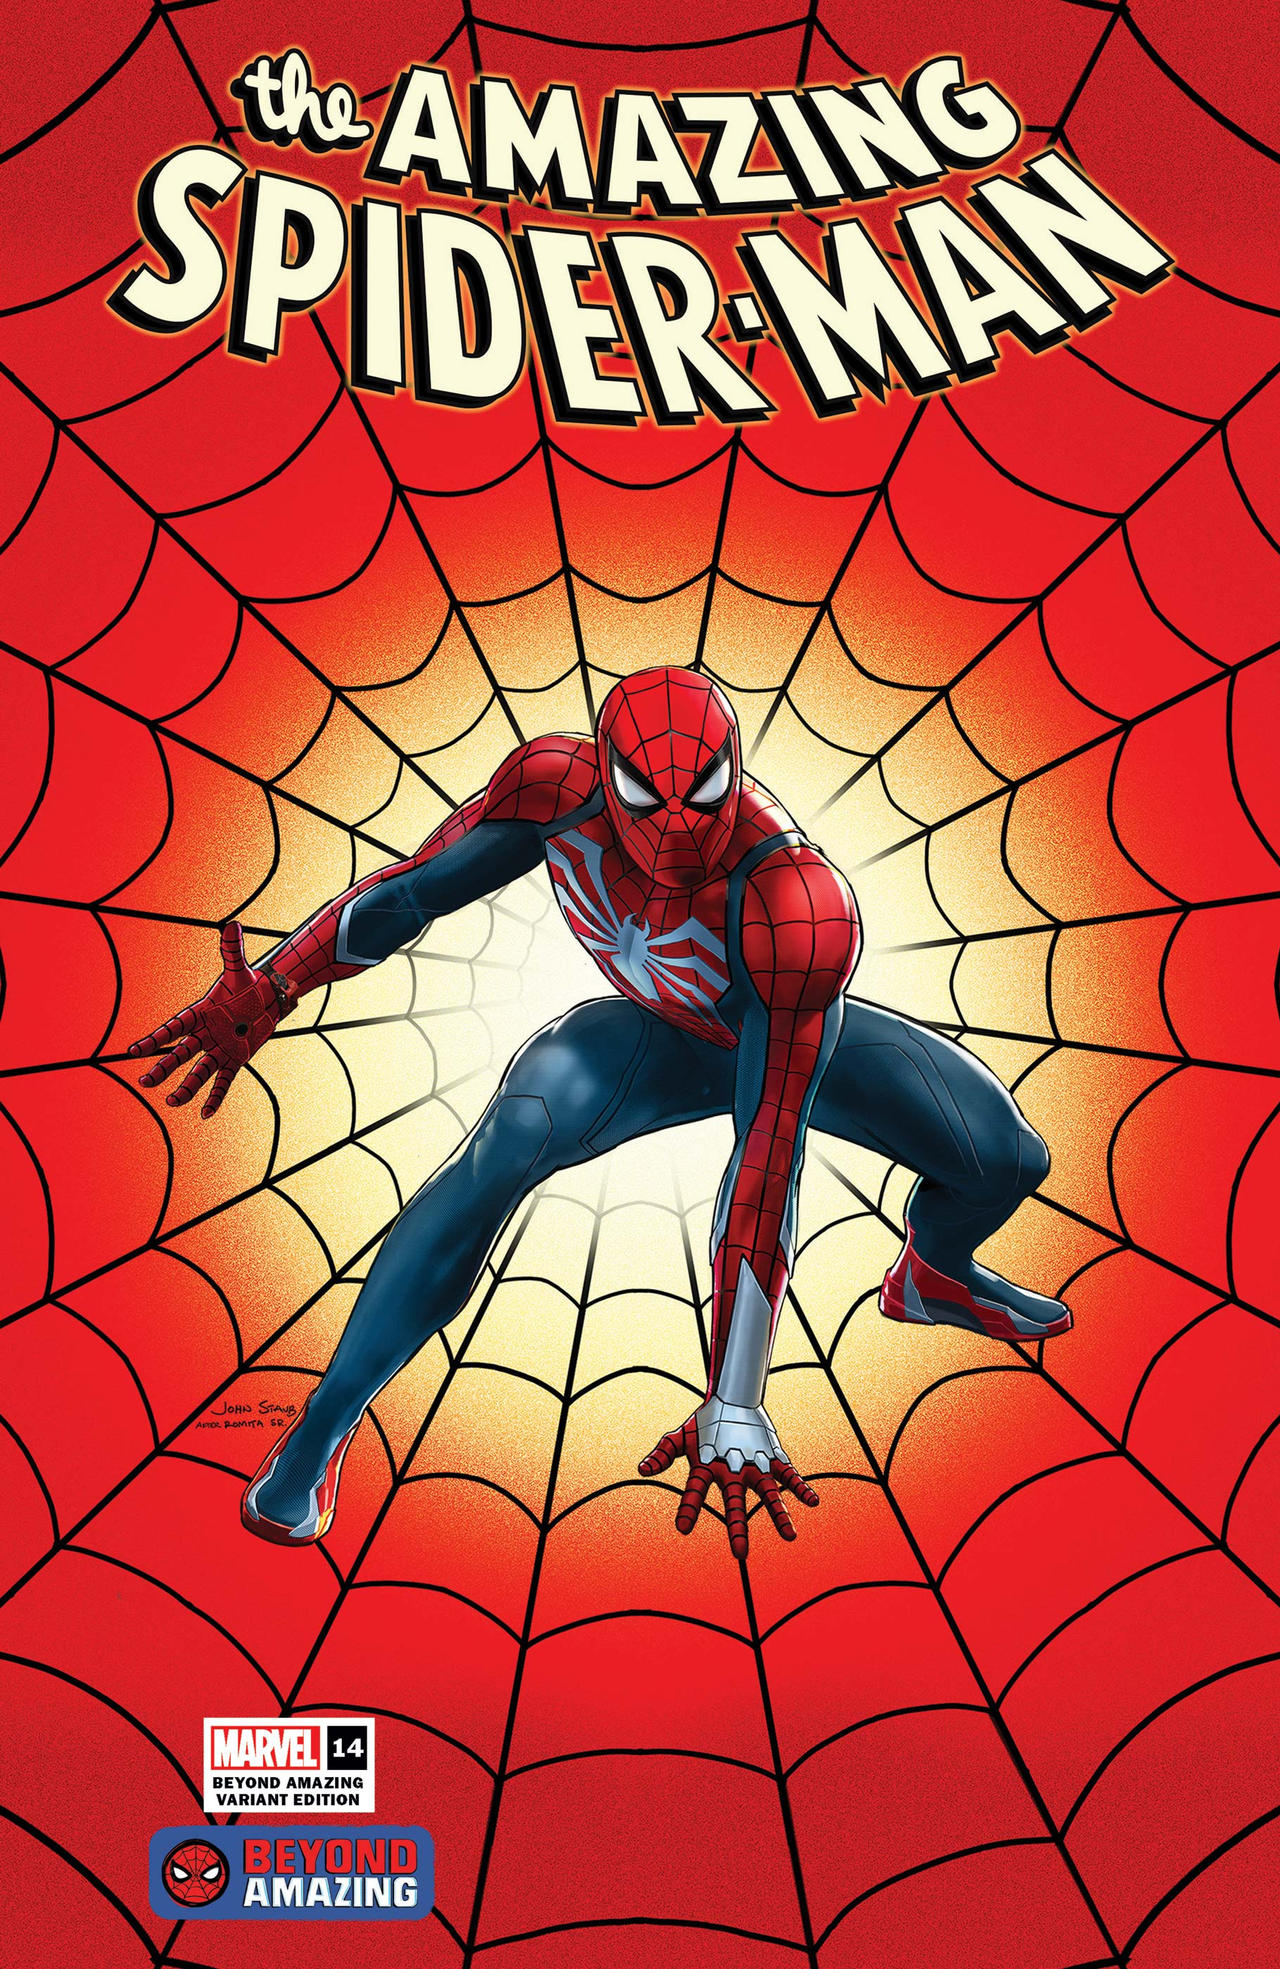 Marvel Spiderman ps4 cover style Avengers EMH by yostverseeditsmarvel on  DeviantArt